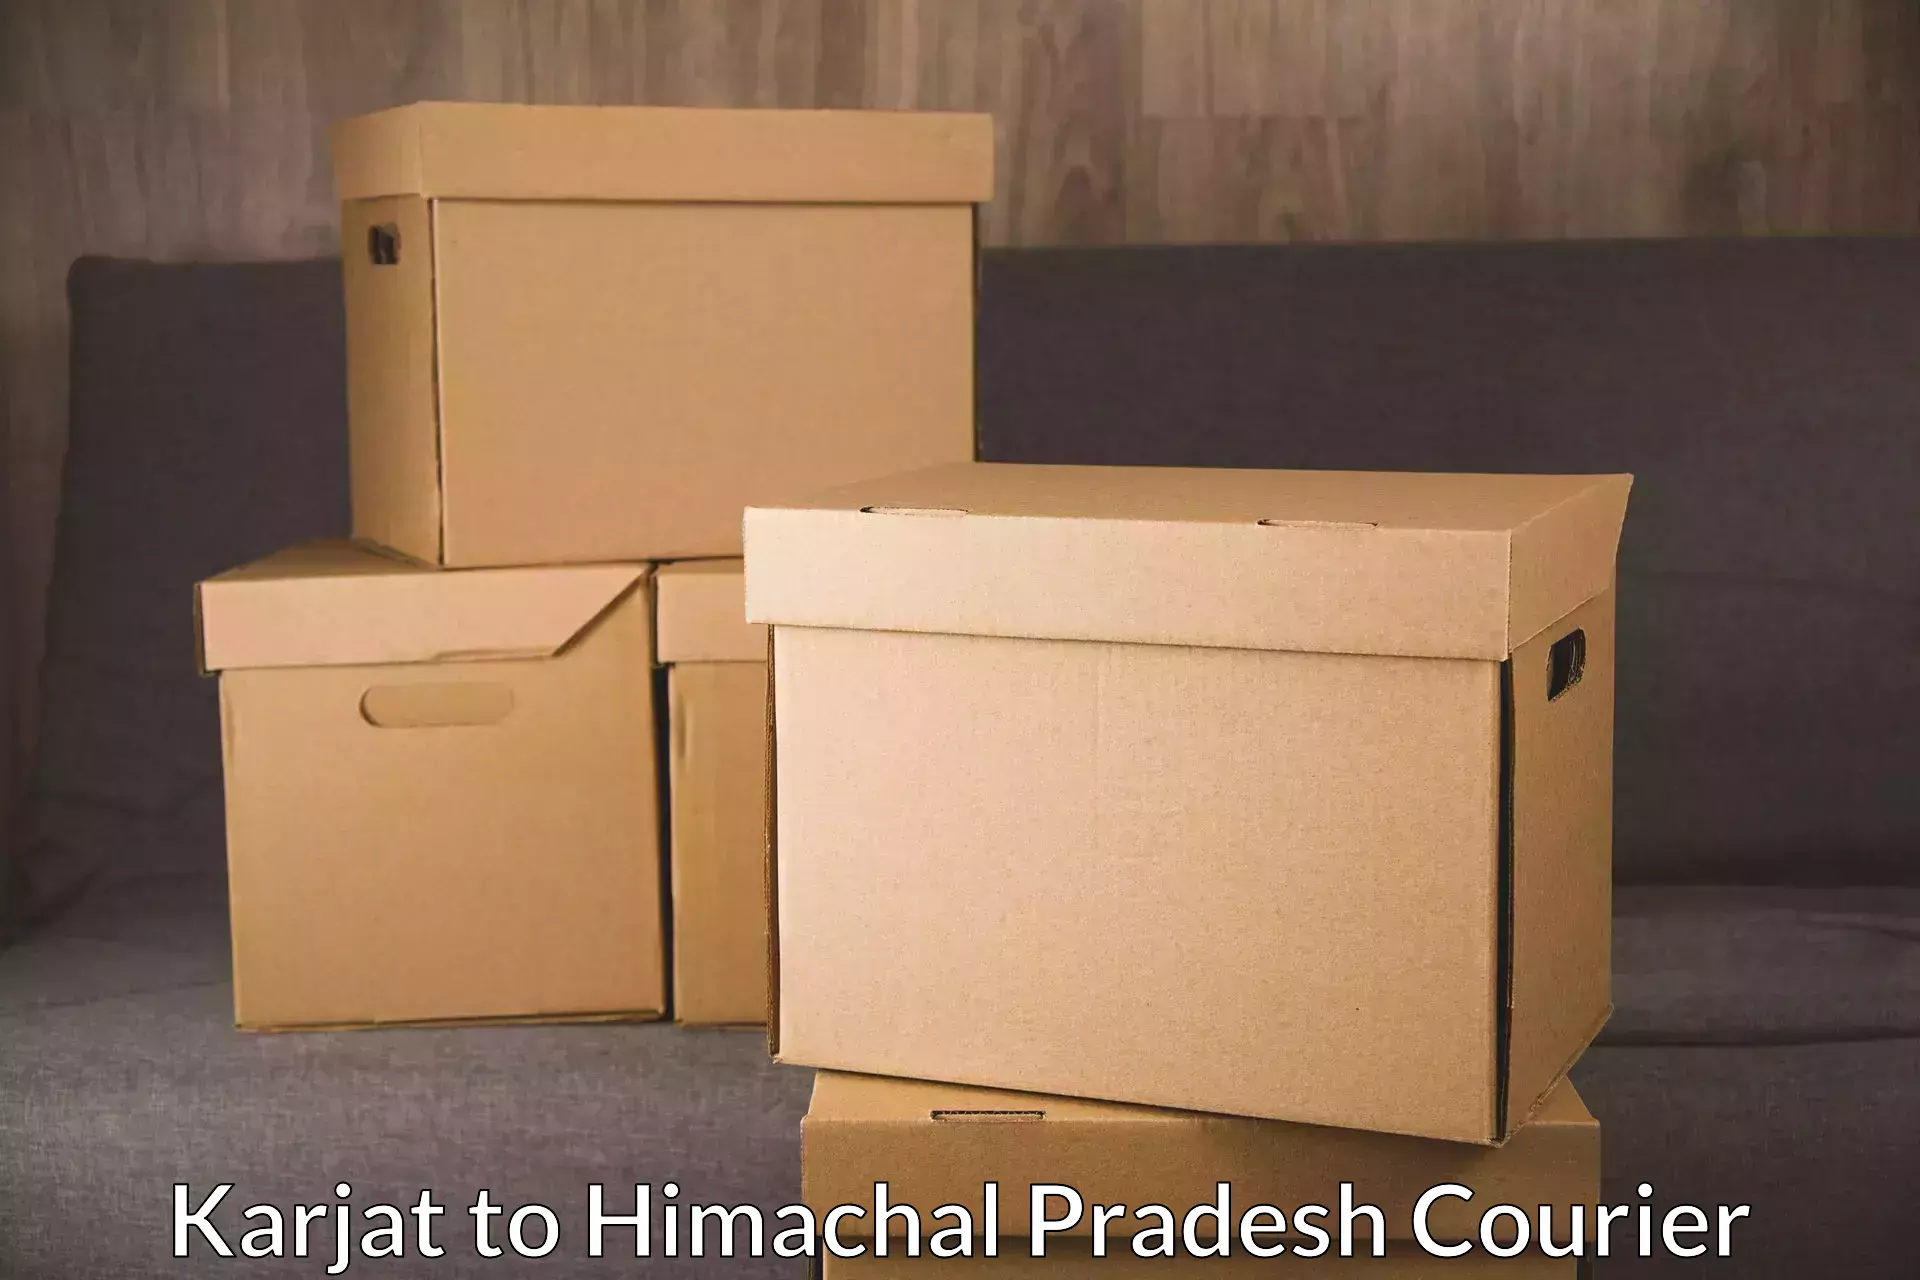 High-capacity parcel service Karjat to Dharamshala